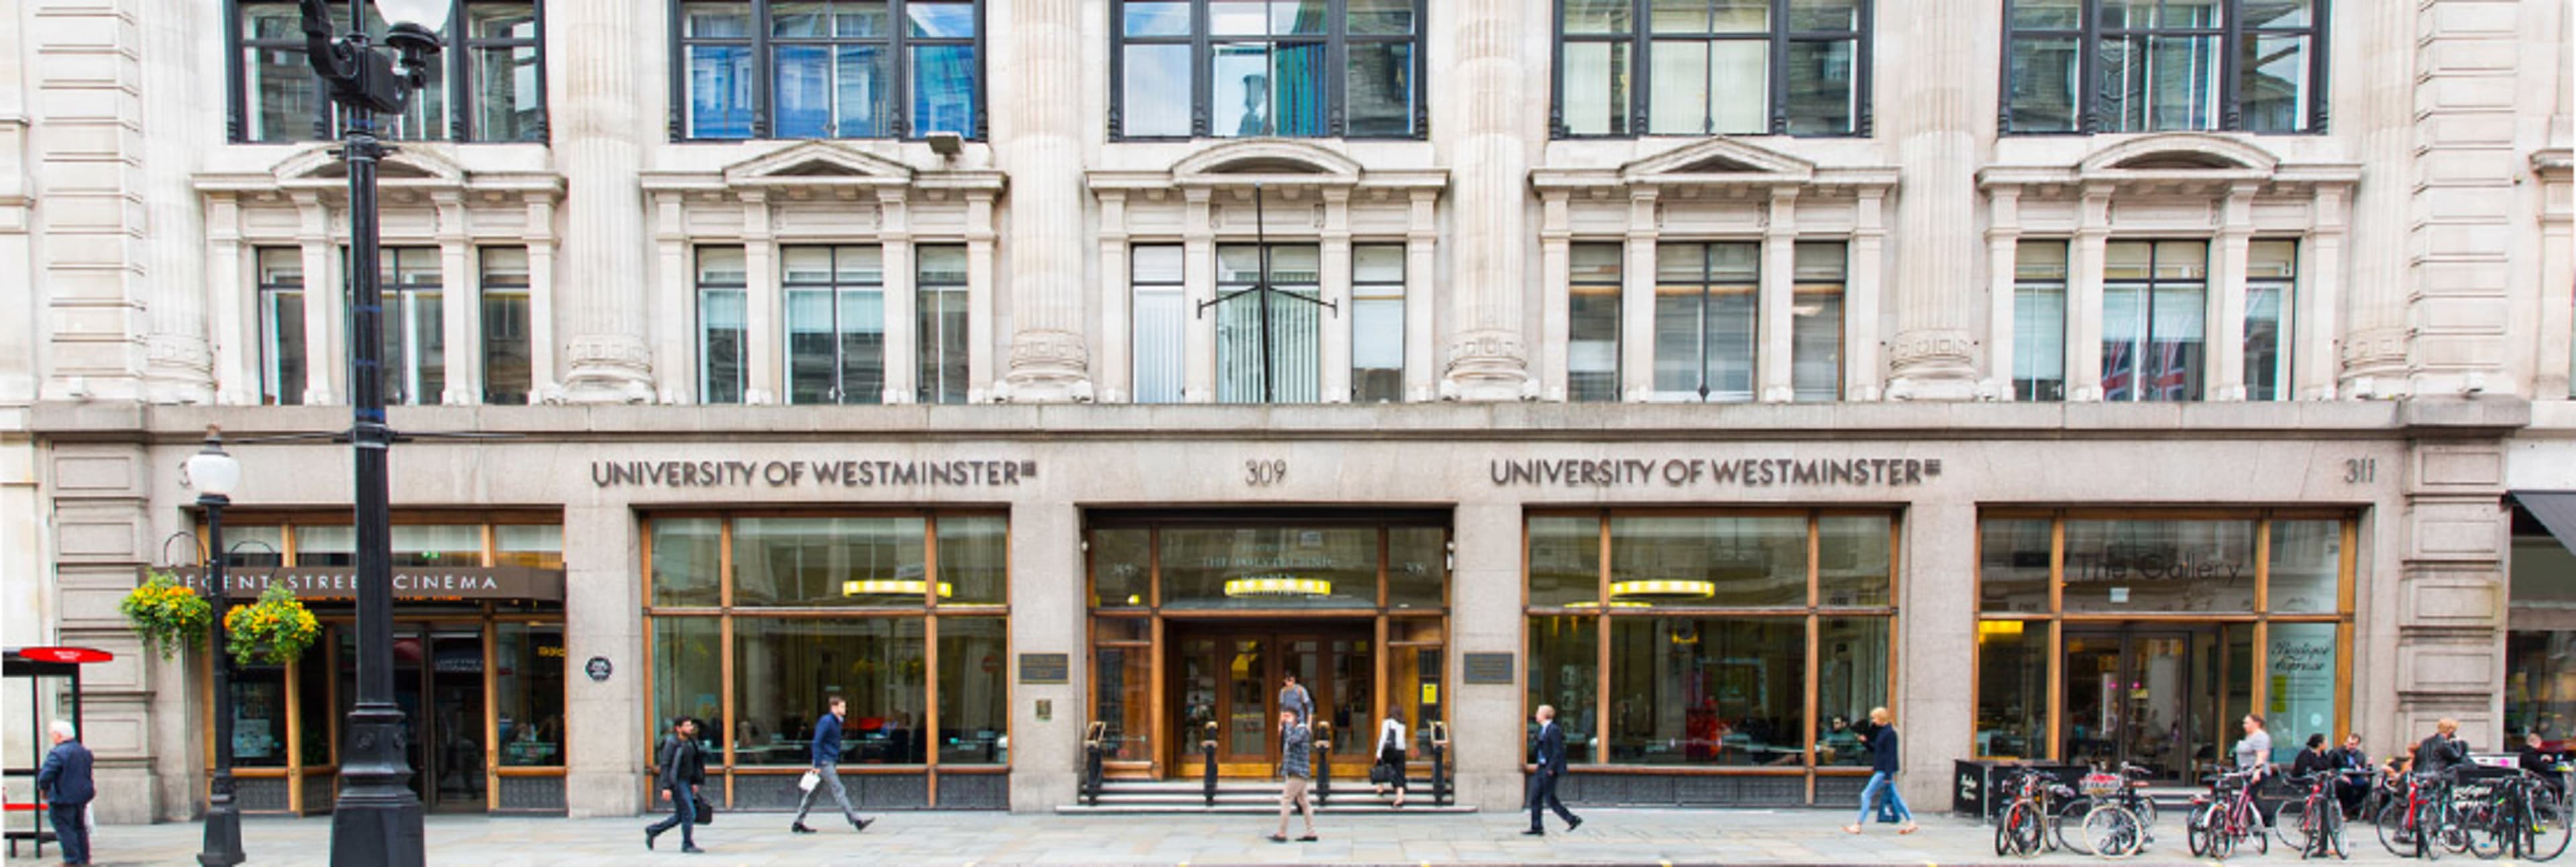 Exterior building - Westminster University